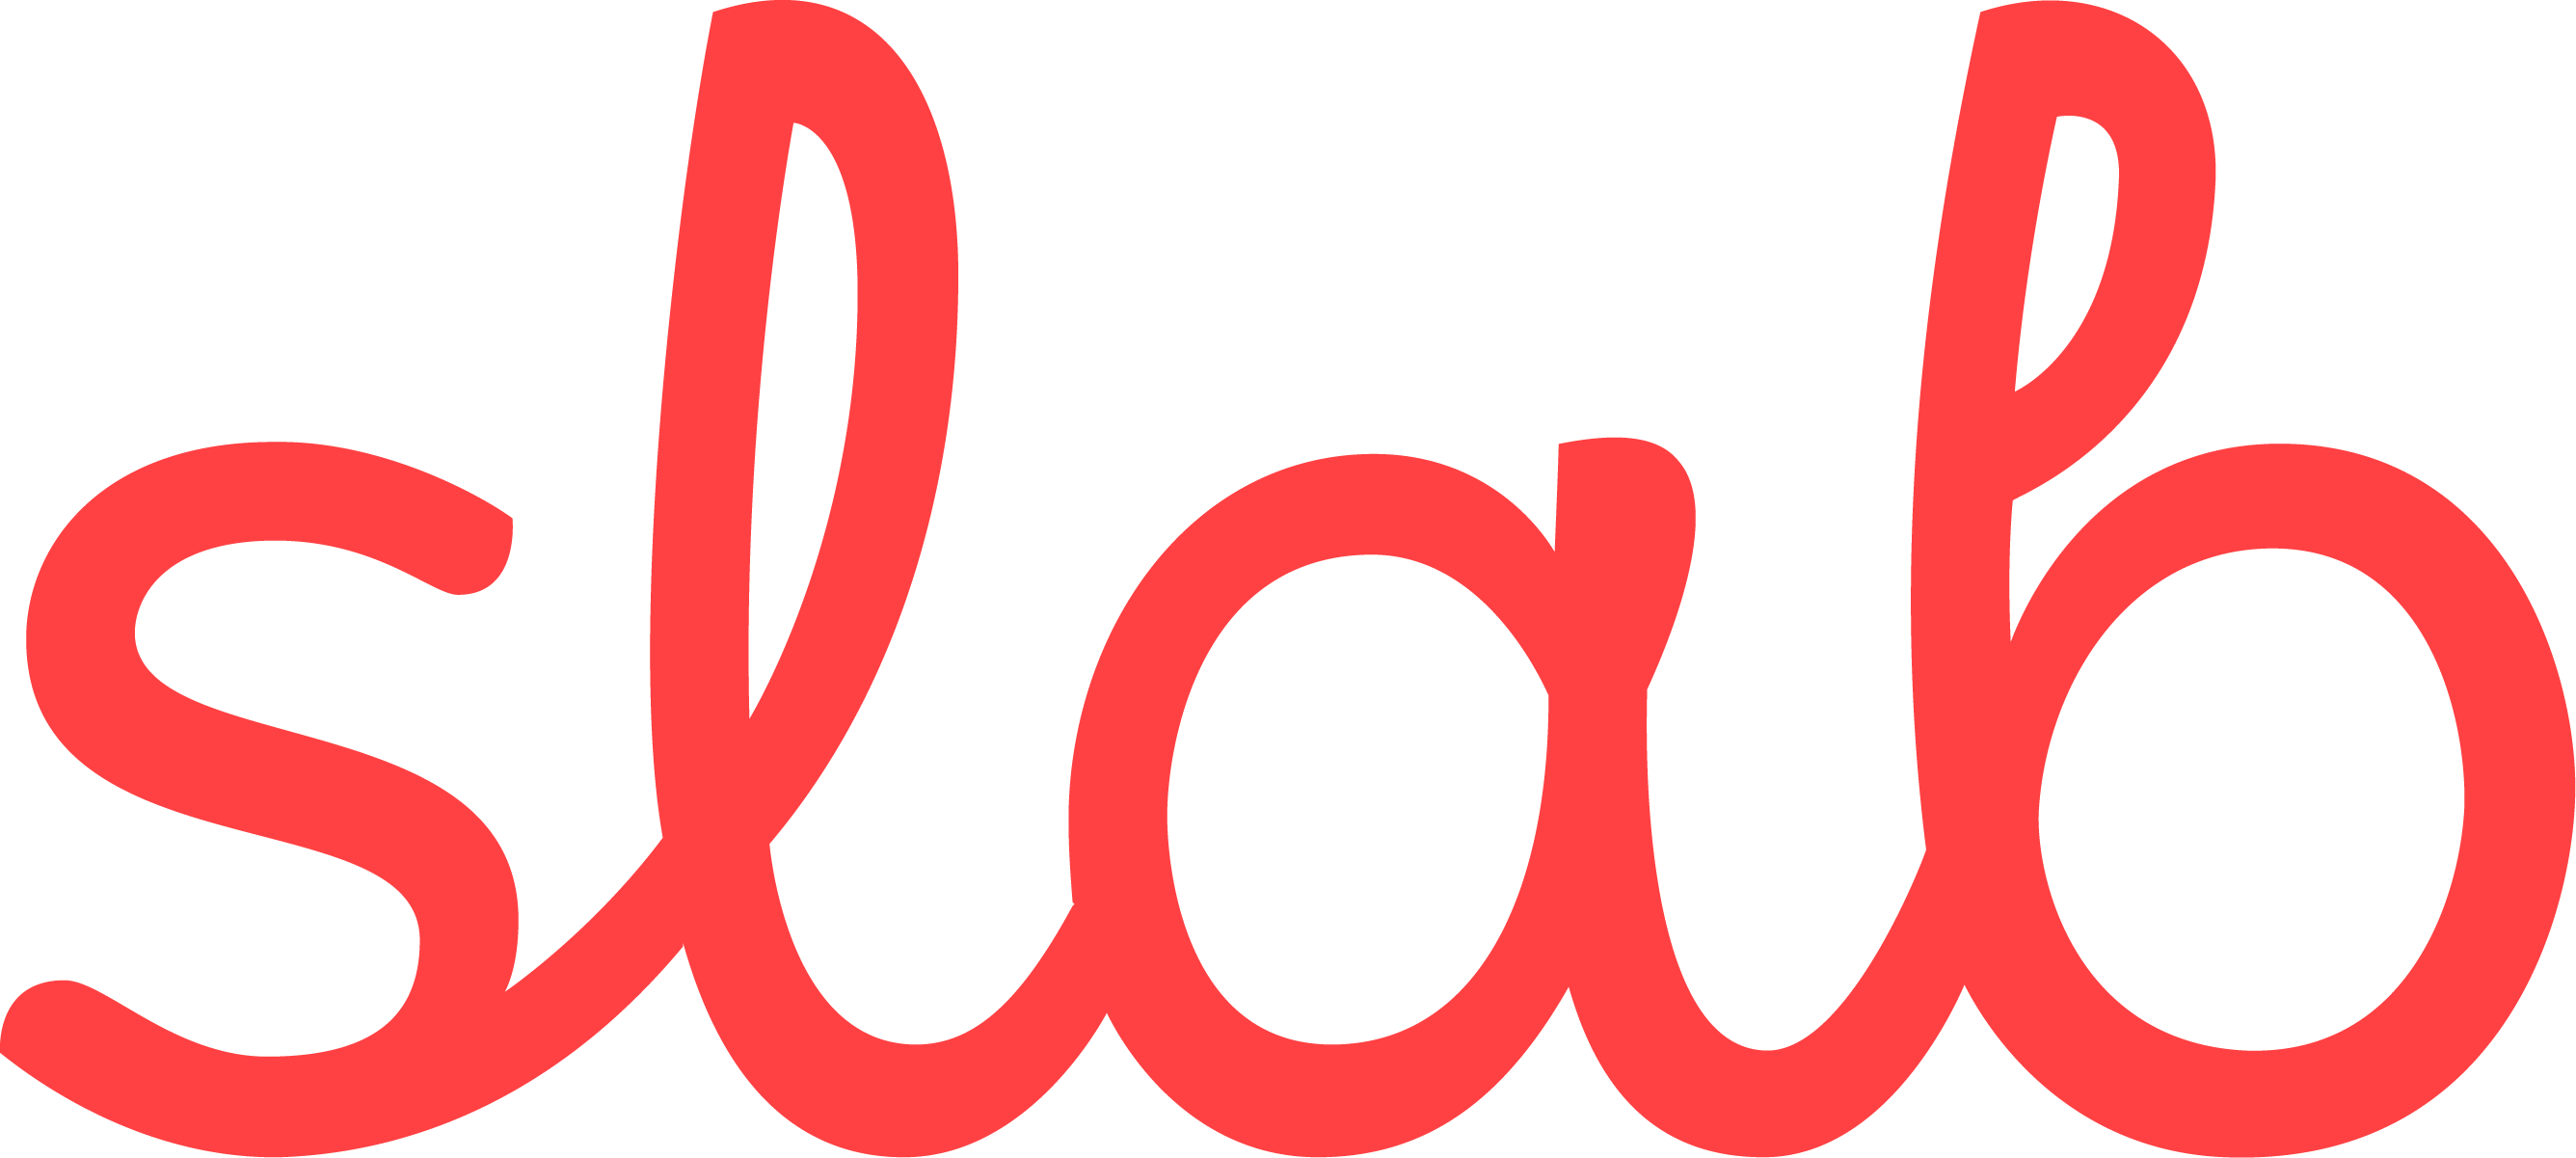 Slab logo